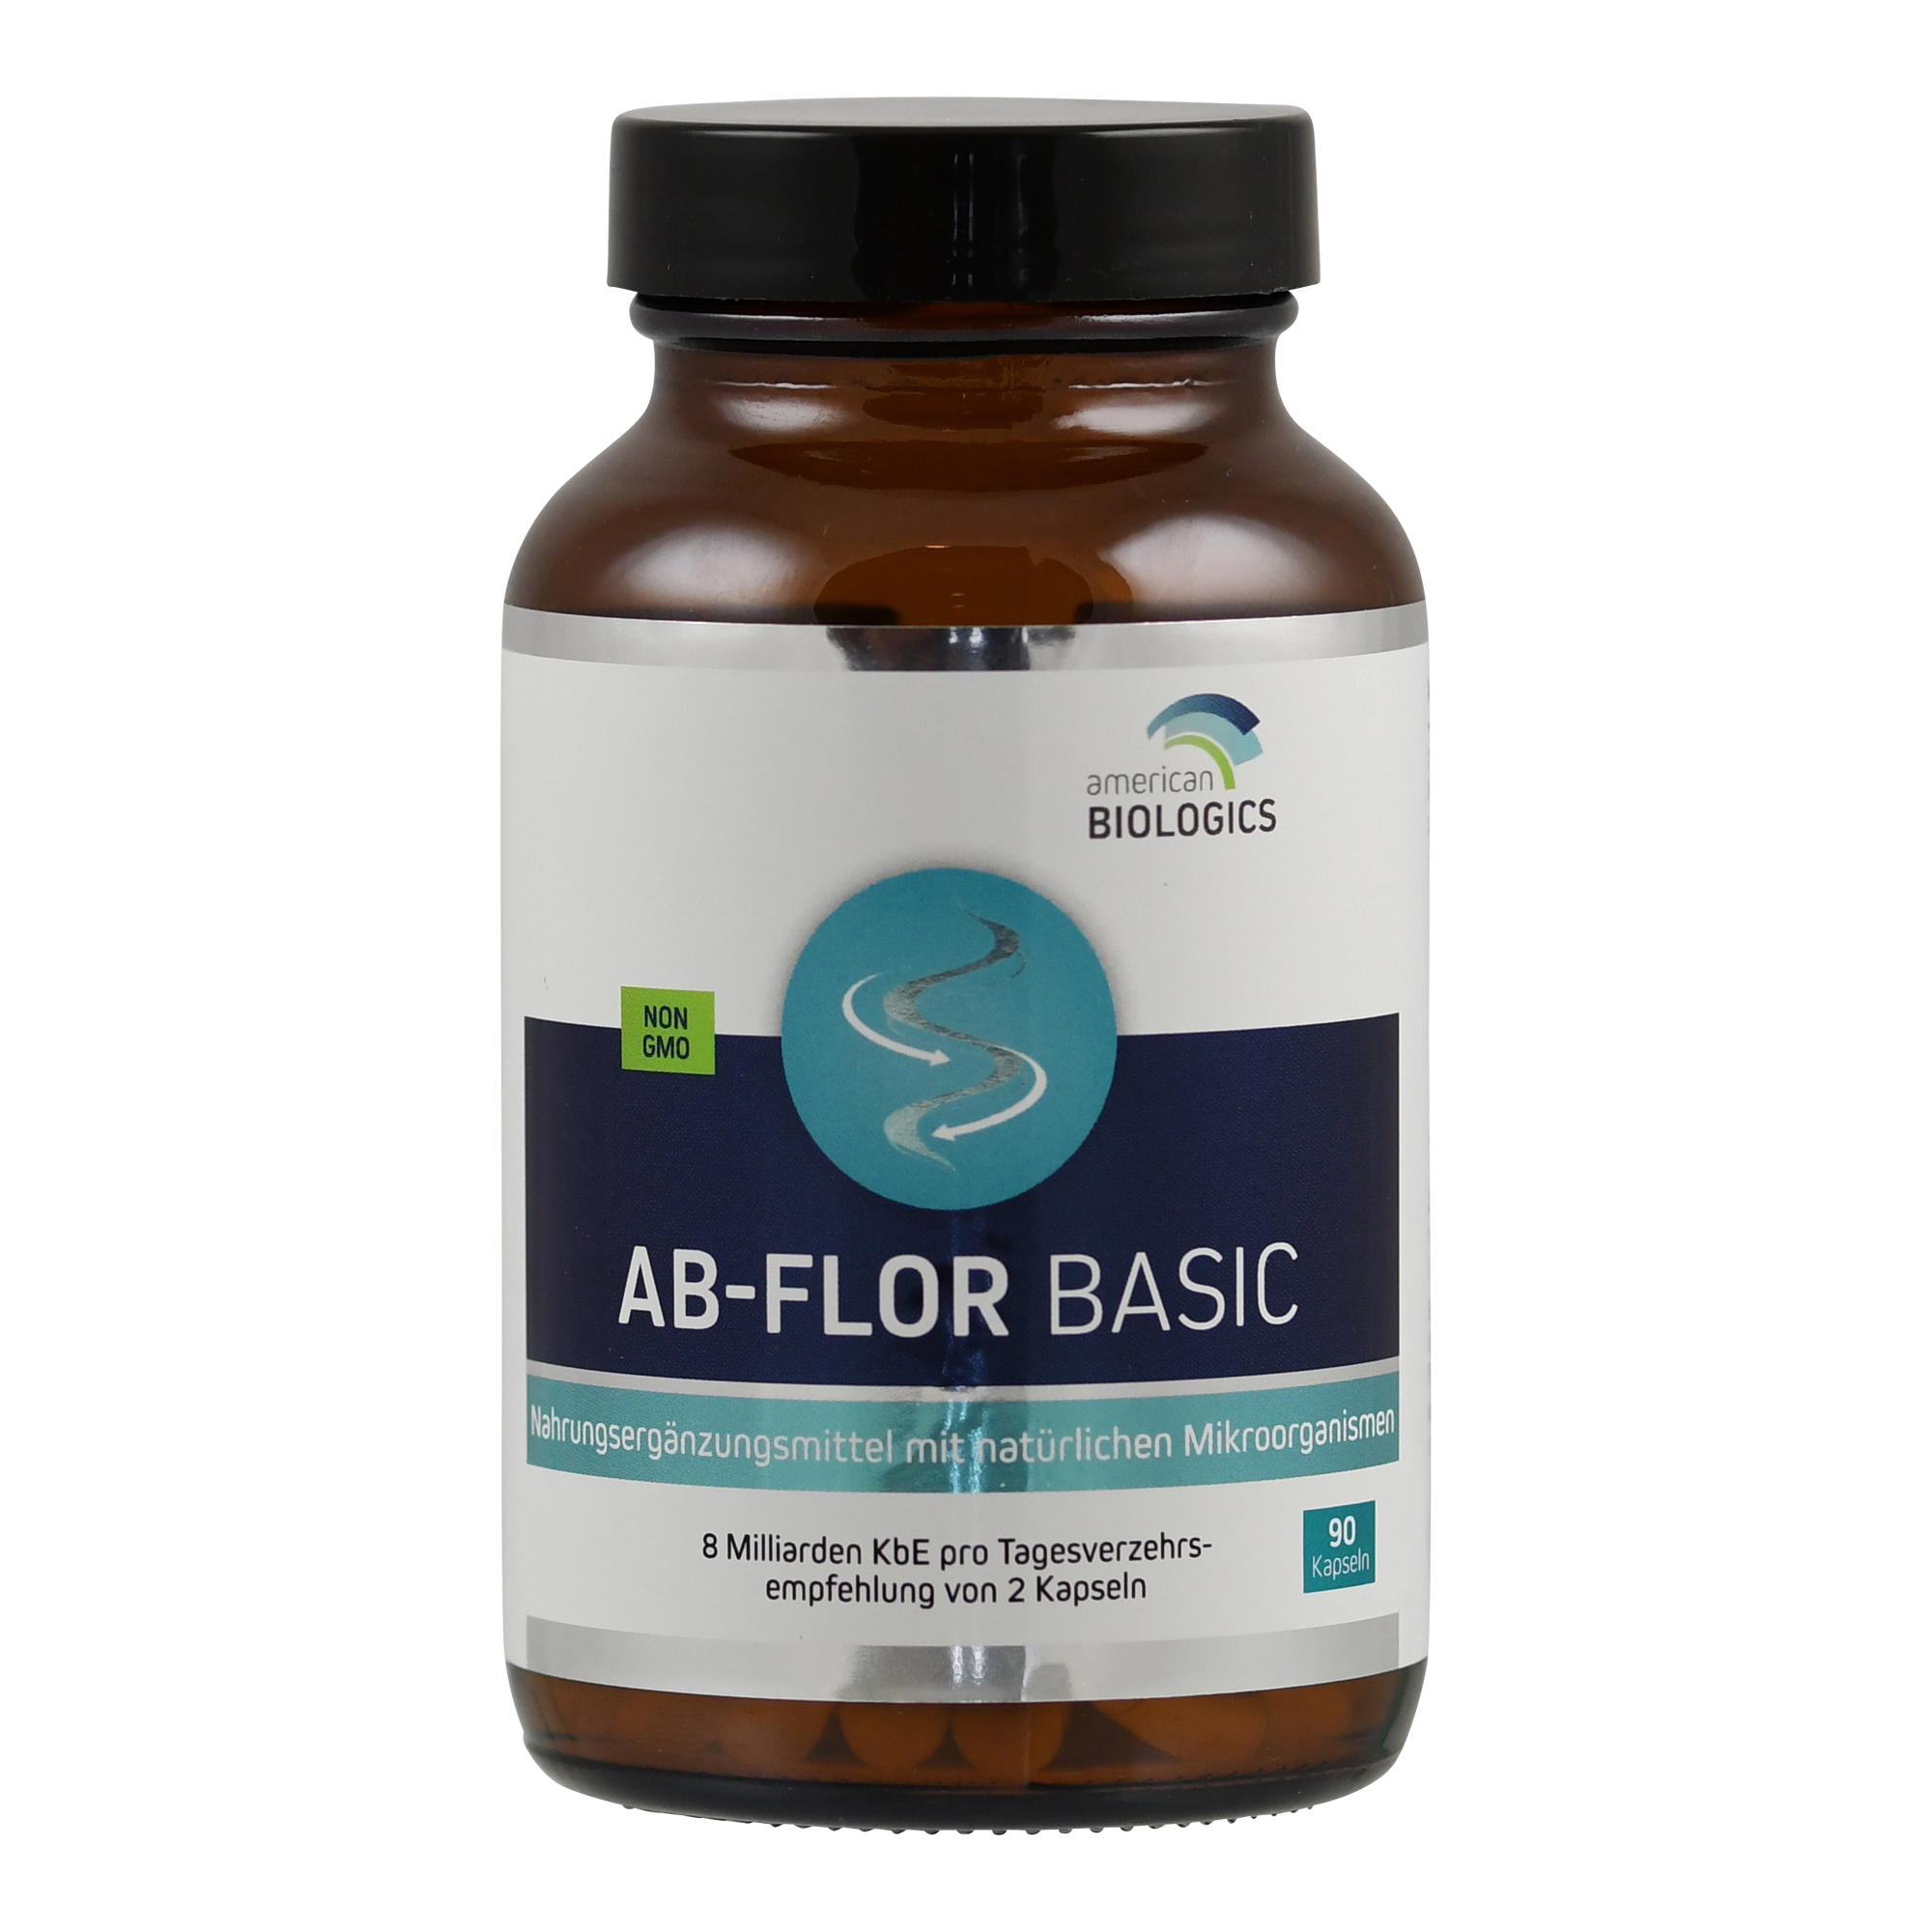 AB-Flor Basic von American Biologics.